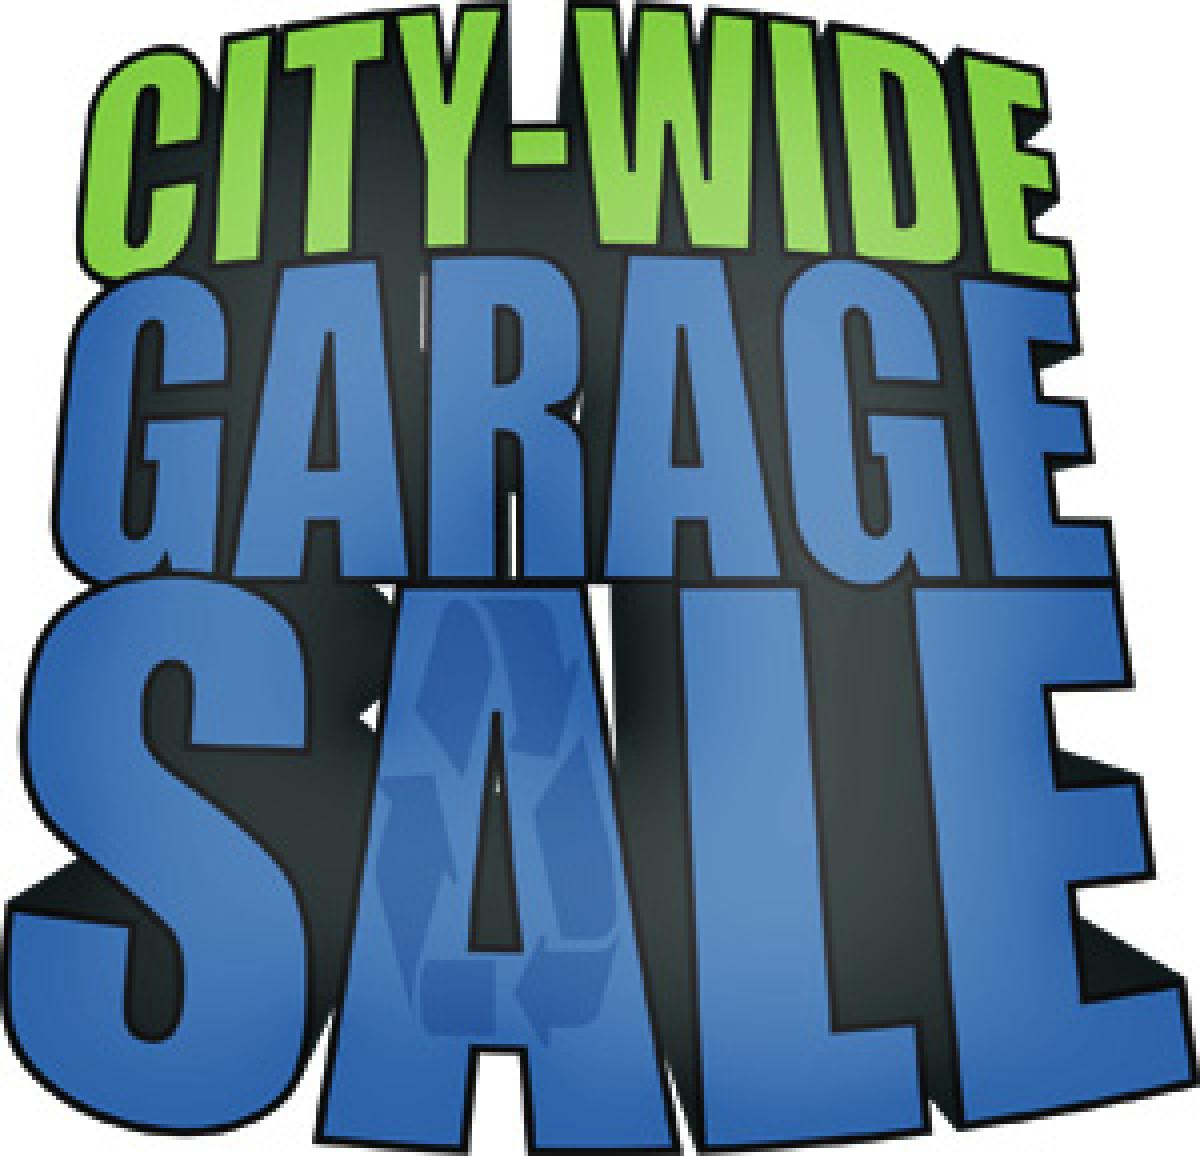 OK, Grove, City Wide Garage Sale . May 5, 6 & 7, 2017